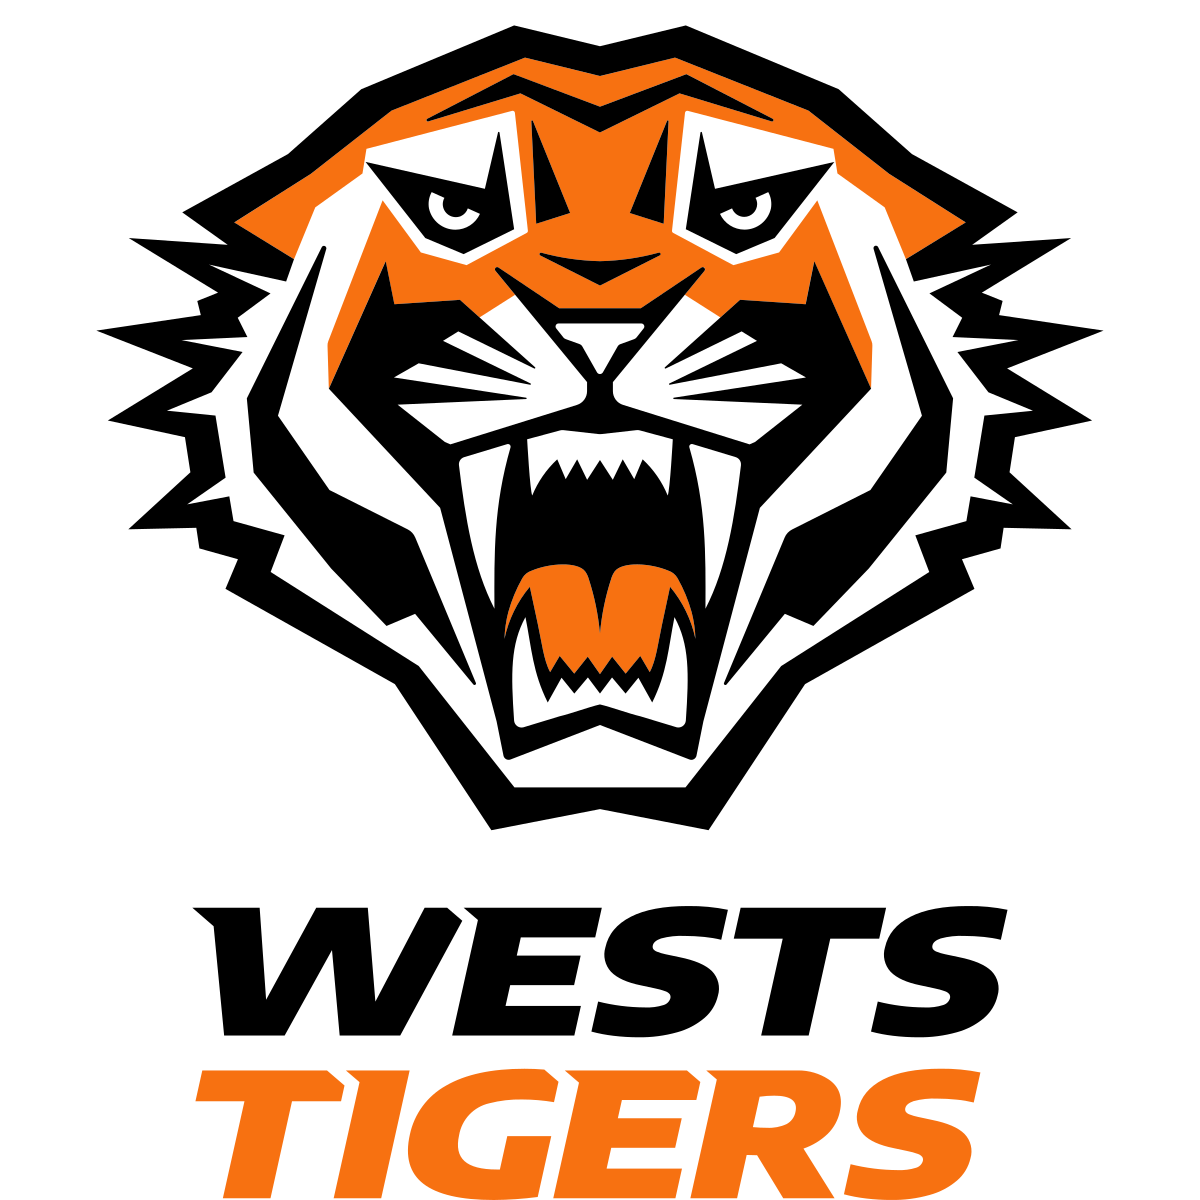 Wests Tigers - Wikipedia